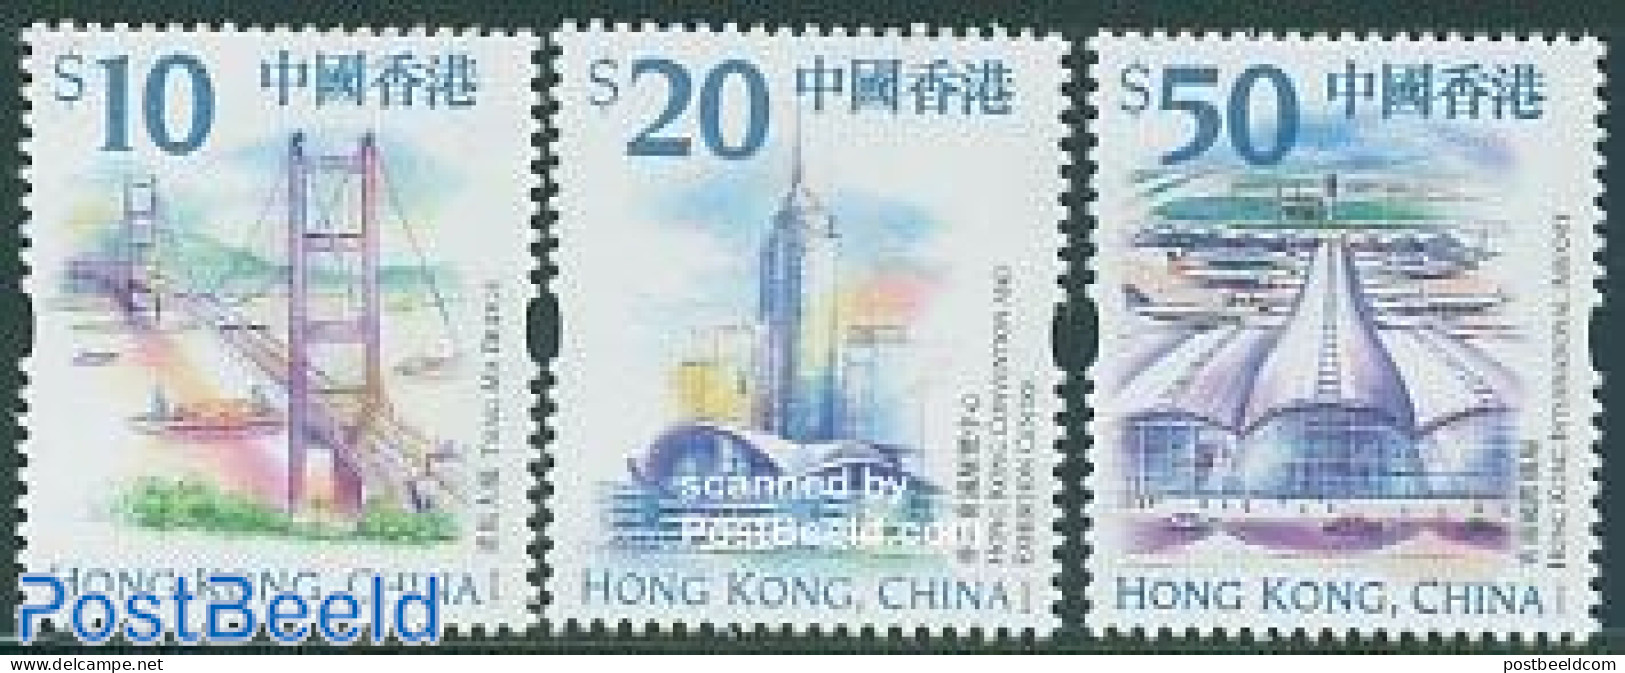 Hong Kong 1999 Definitives 3v, Mint NH, Transport - Aircraft & Aviation - Art - Bridges And Tunnels - Nuovi